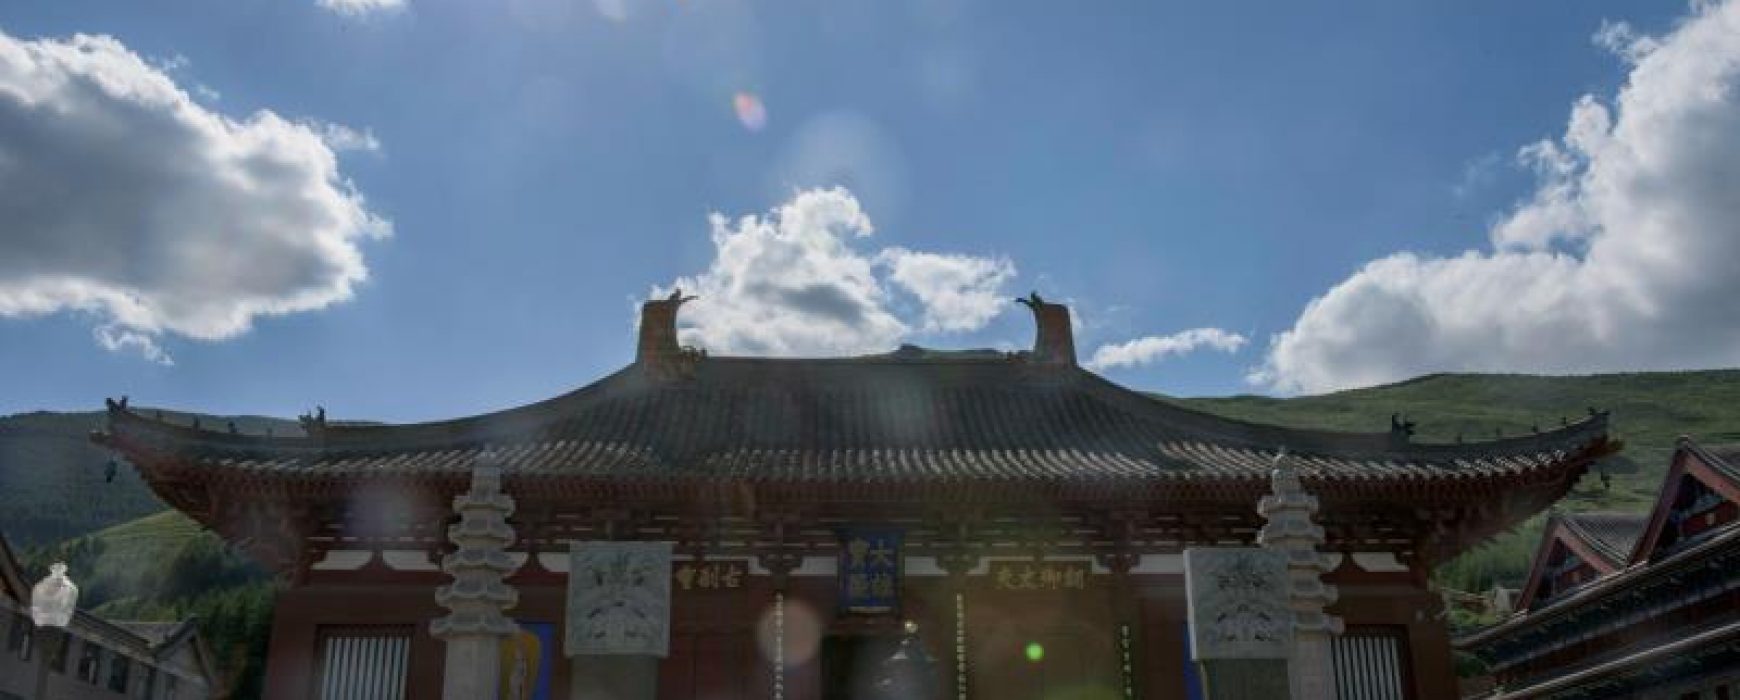 Postdoctoral Fellowships: Center for Buddhist Studies in Peking University